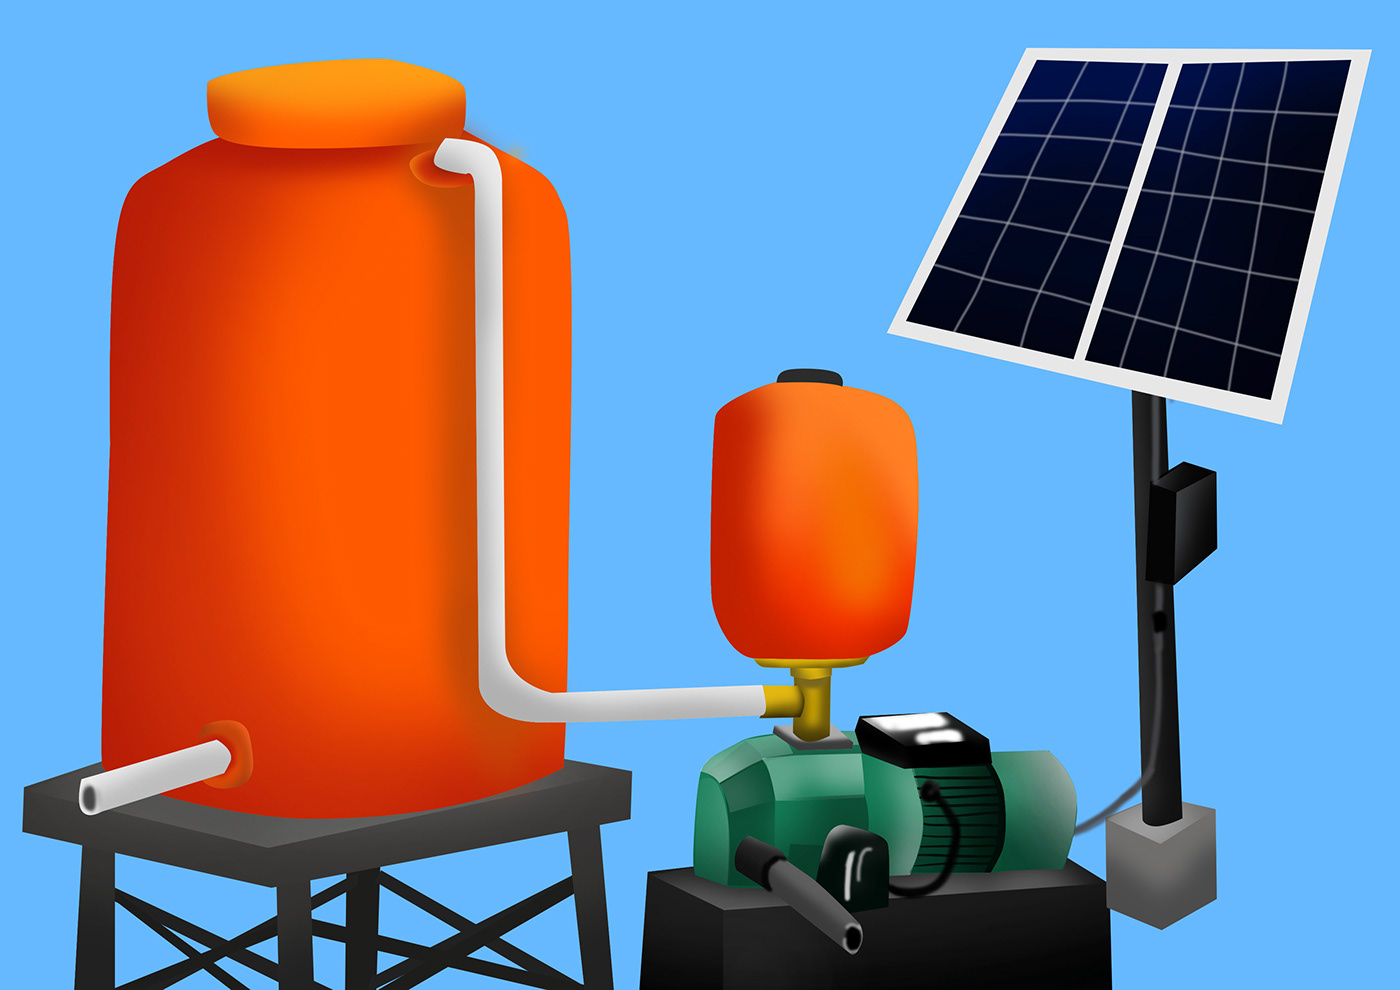 jet pump machine solar panel tools